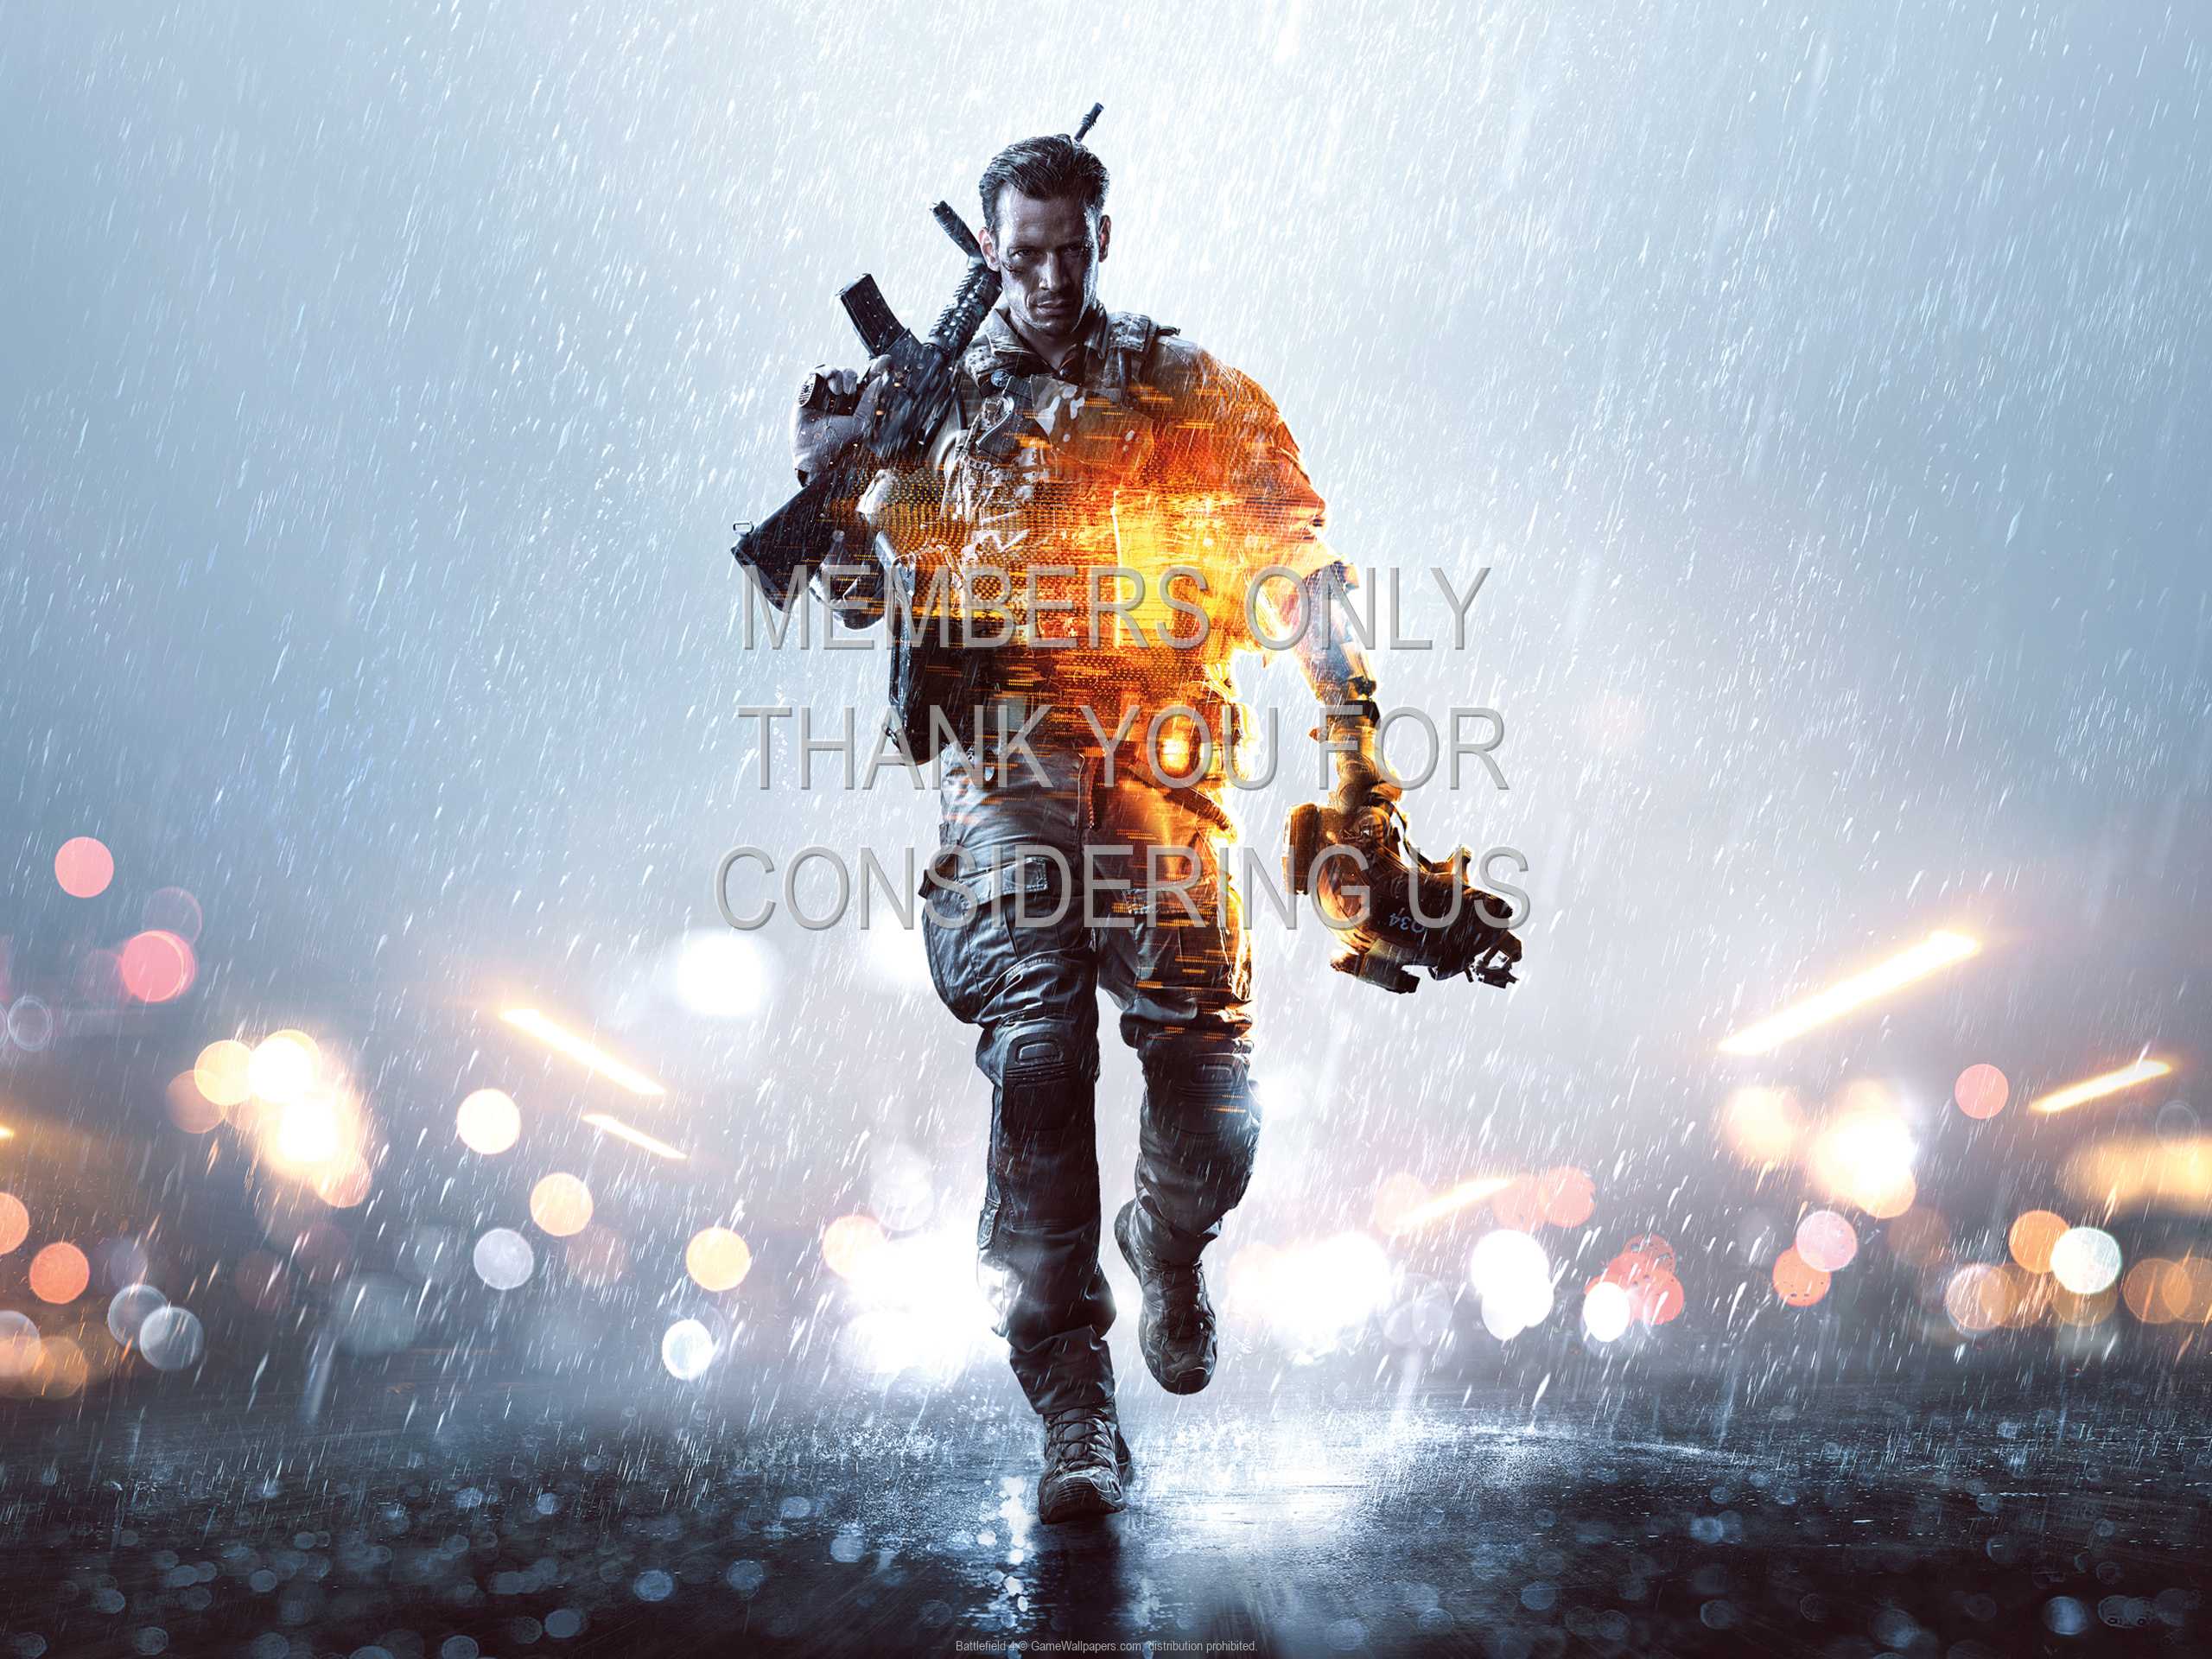 Battlefield 4 1080p Horizontal Mobile wallpaper or background 02